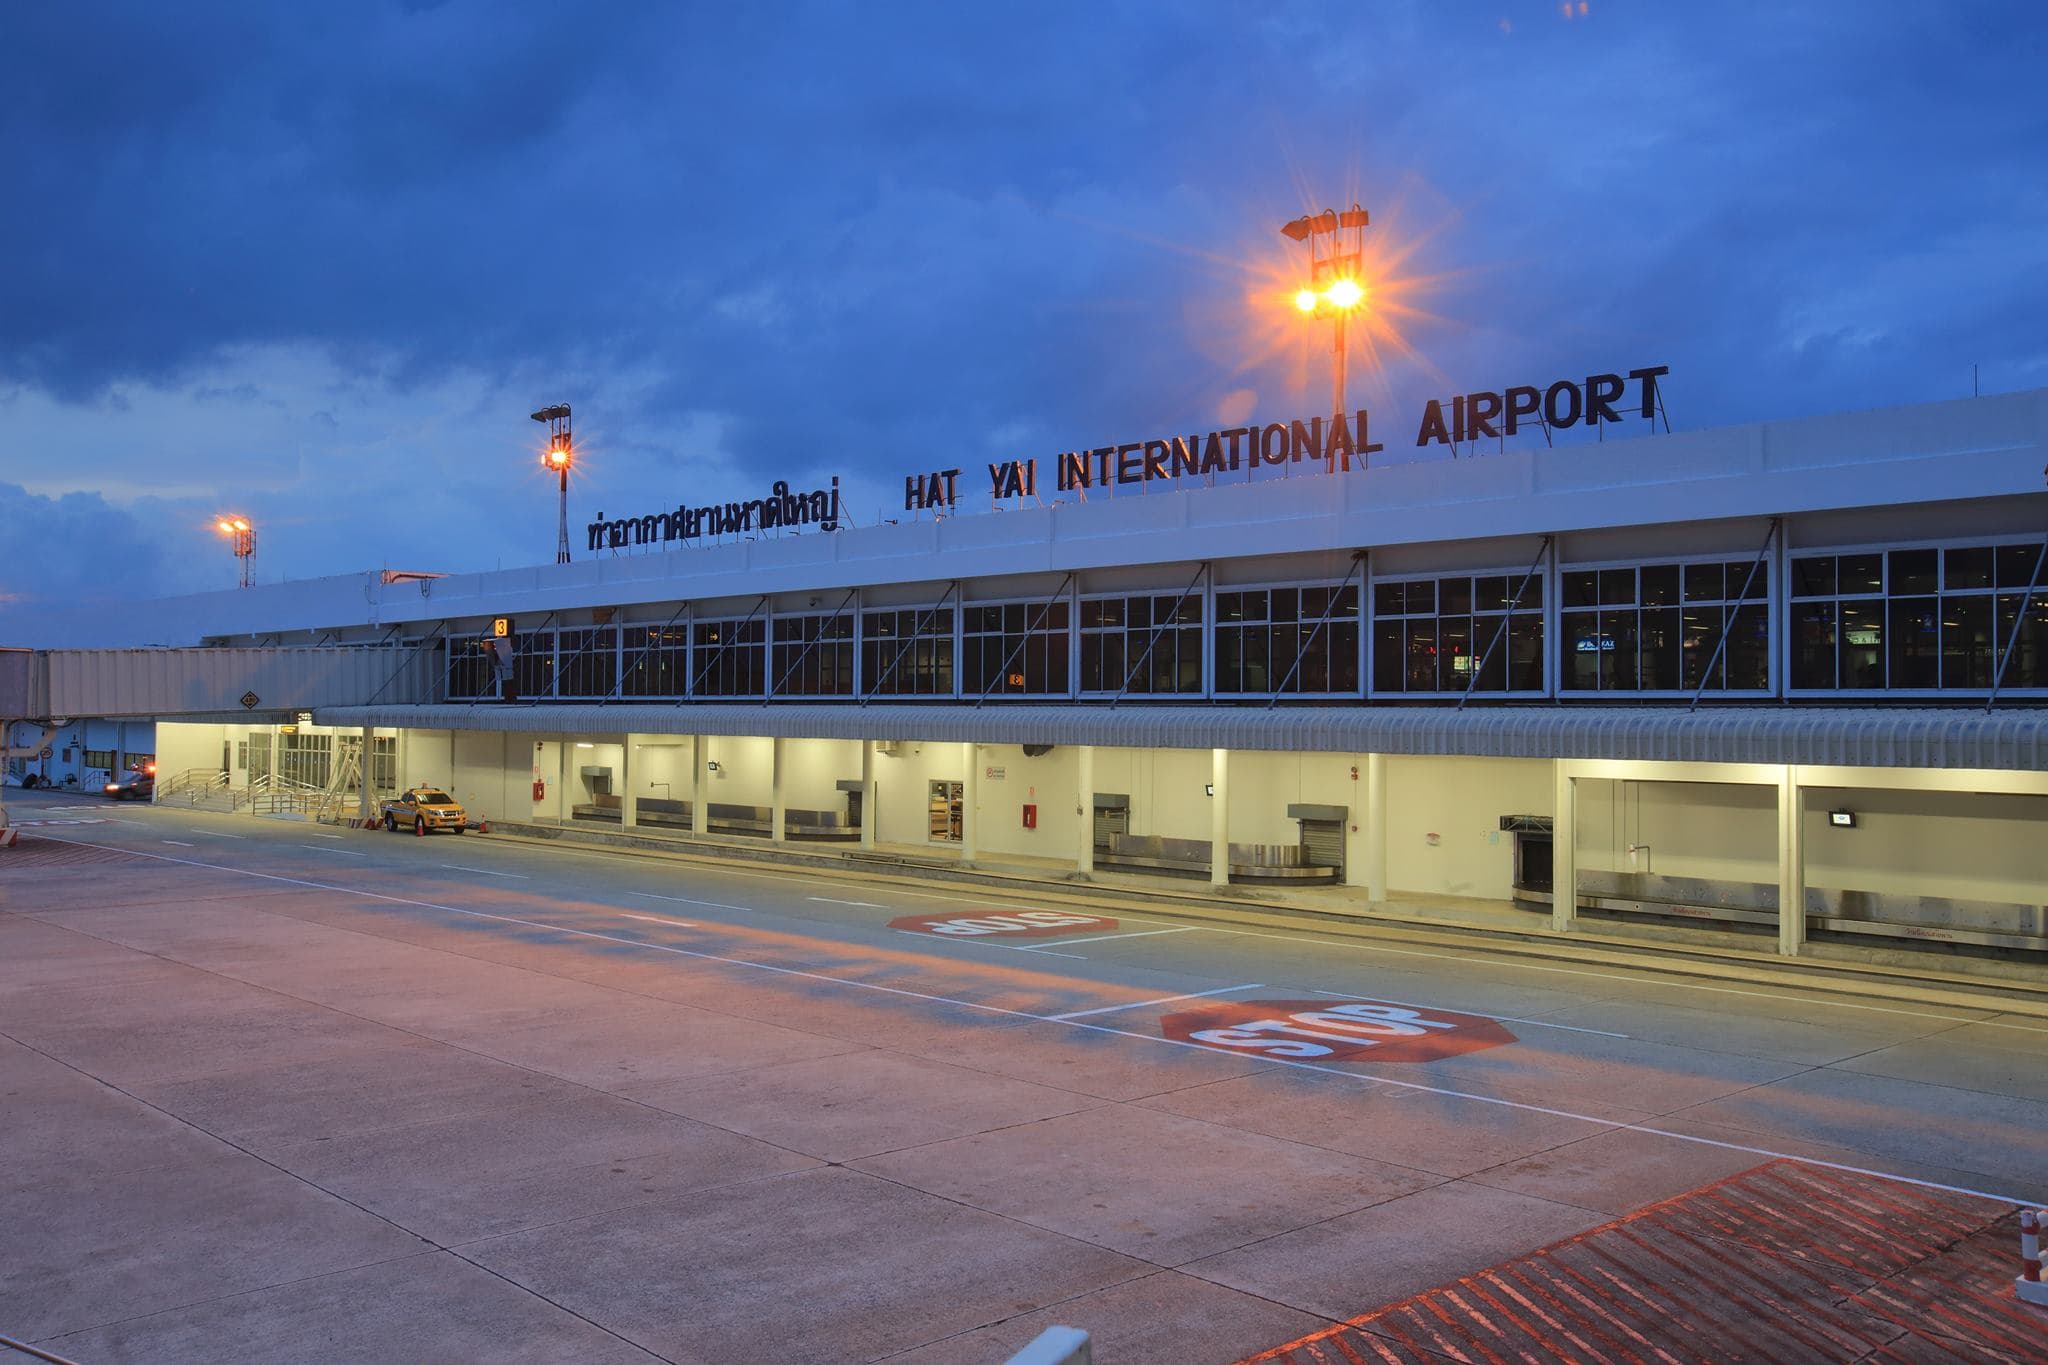 HatYai Airport